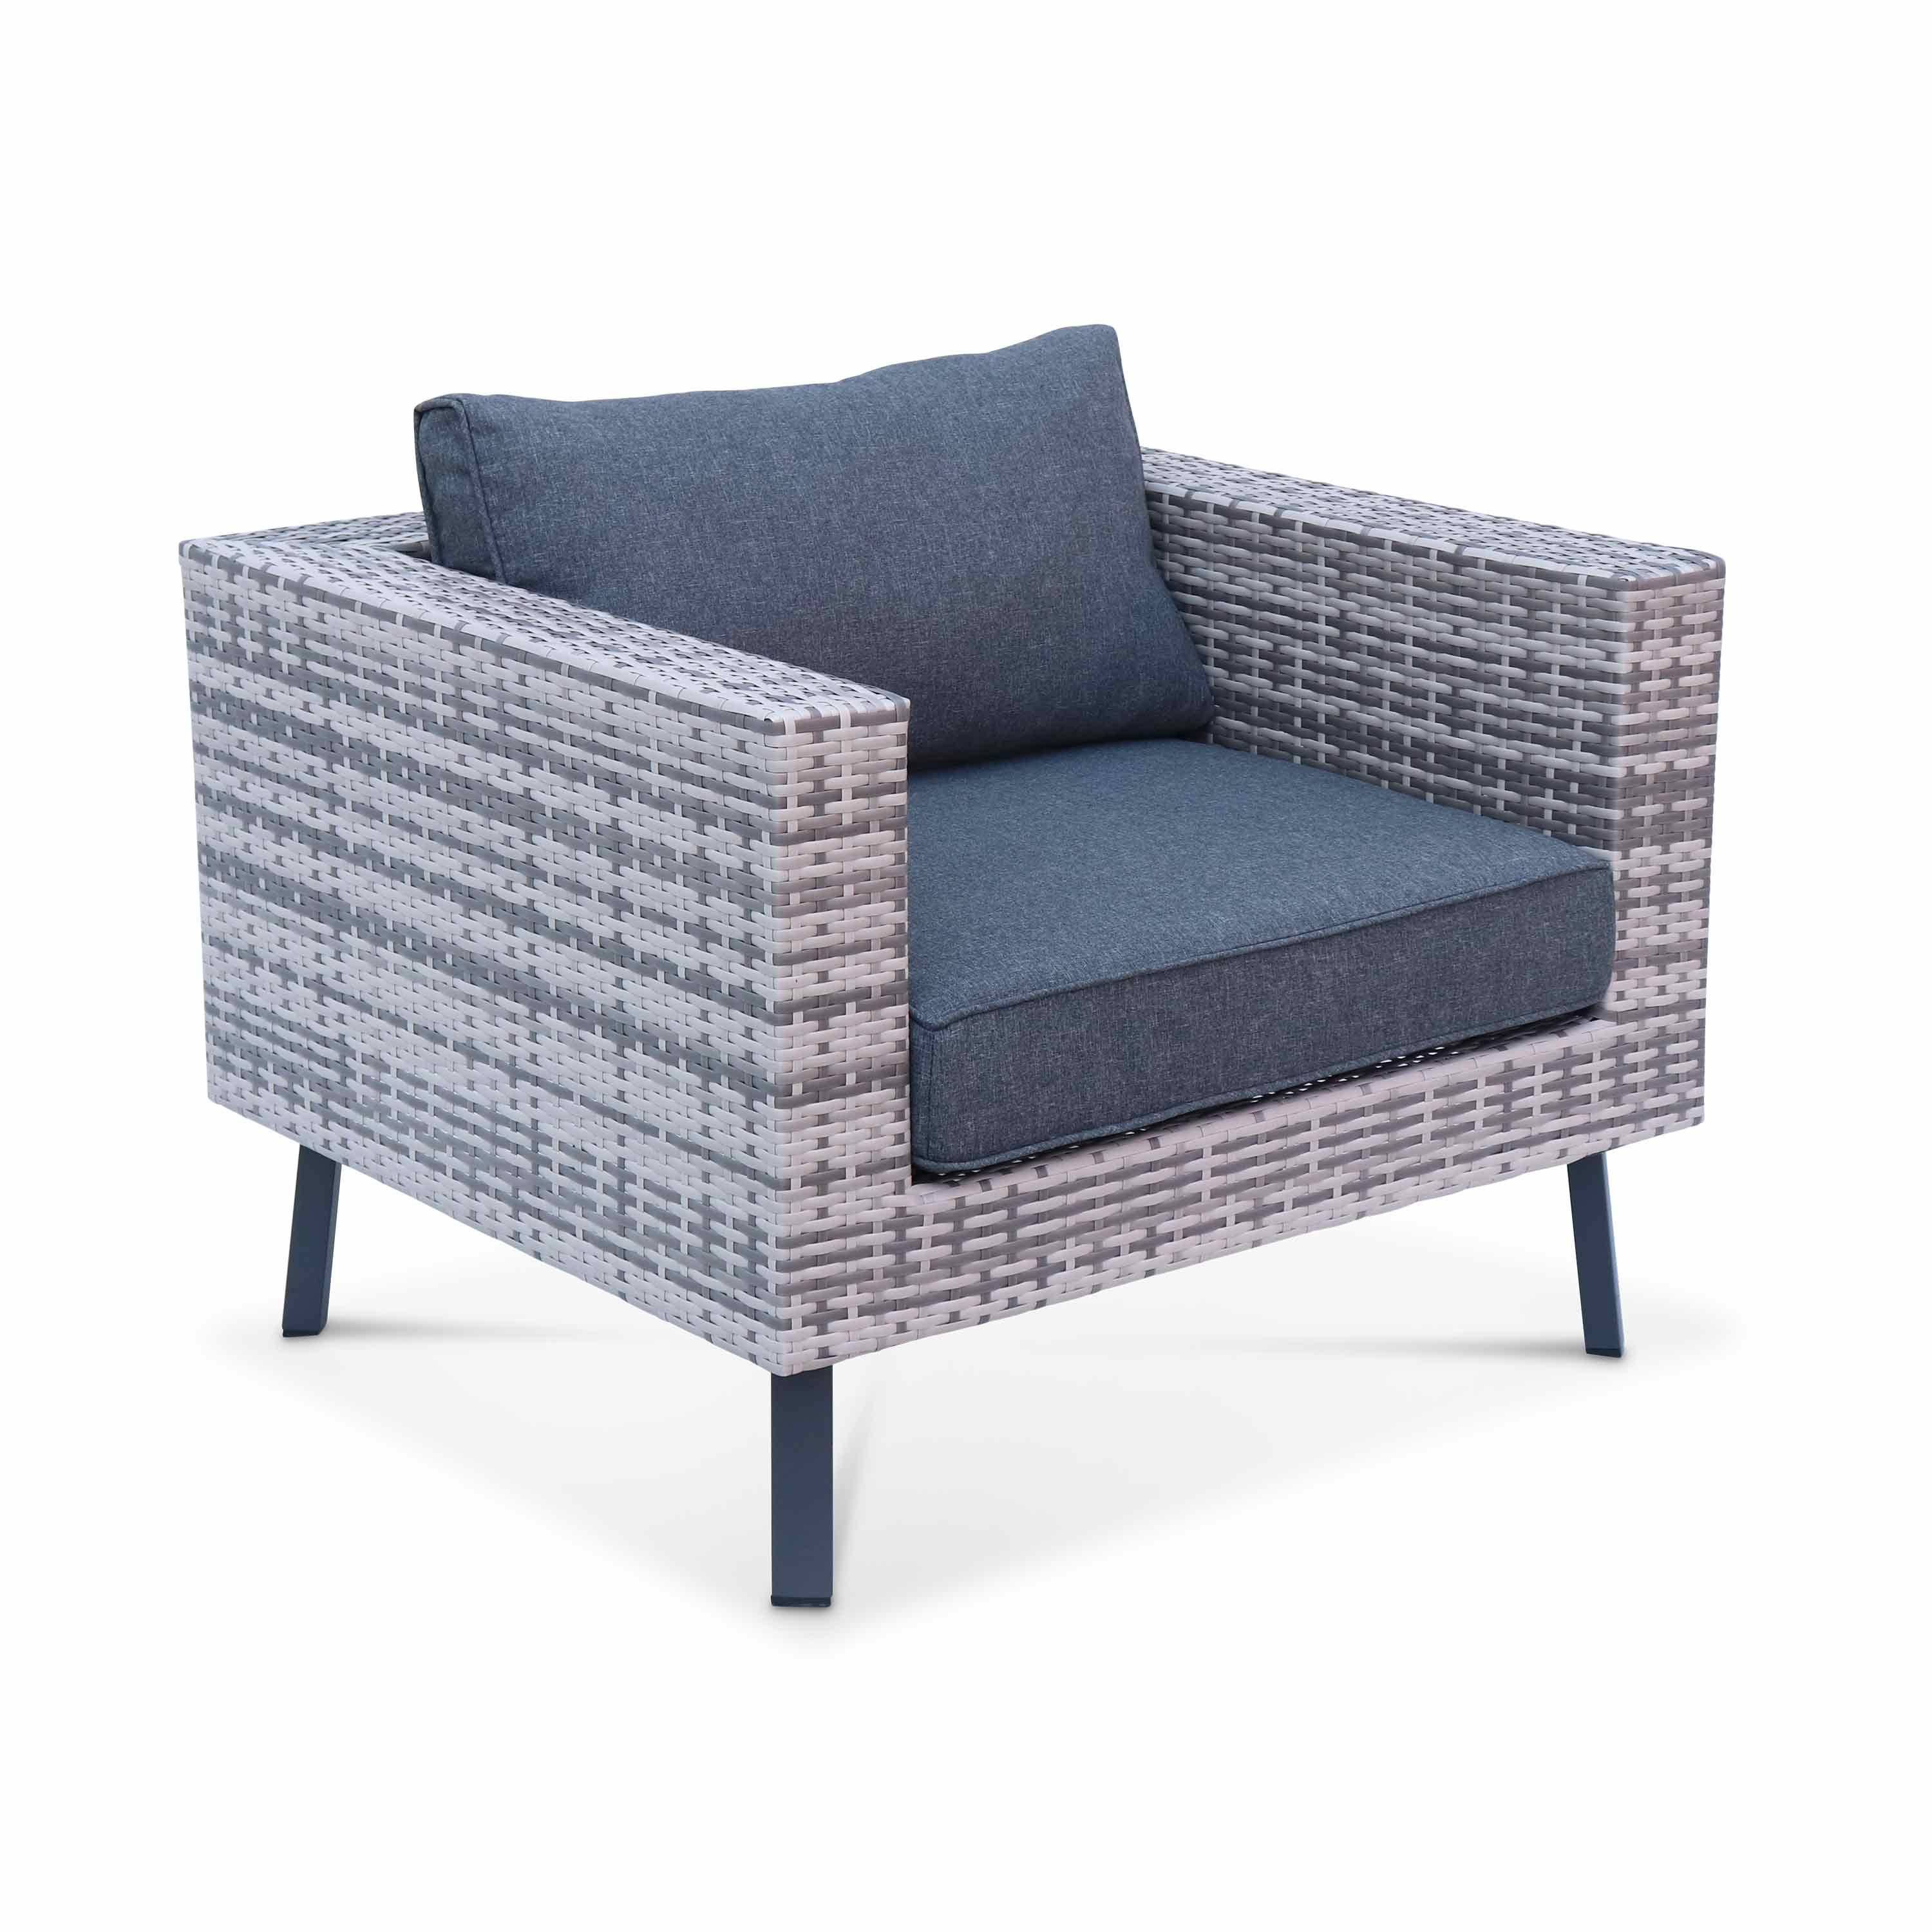 5-seater elevated polyrattan garden sofa set with stylish legs - sofa, 2 armchairs, footrest, coffee table - Alba - Mixed Grey rattan, Charcoal Grey cushions ,sweeek,Photo2